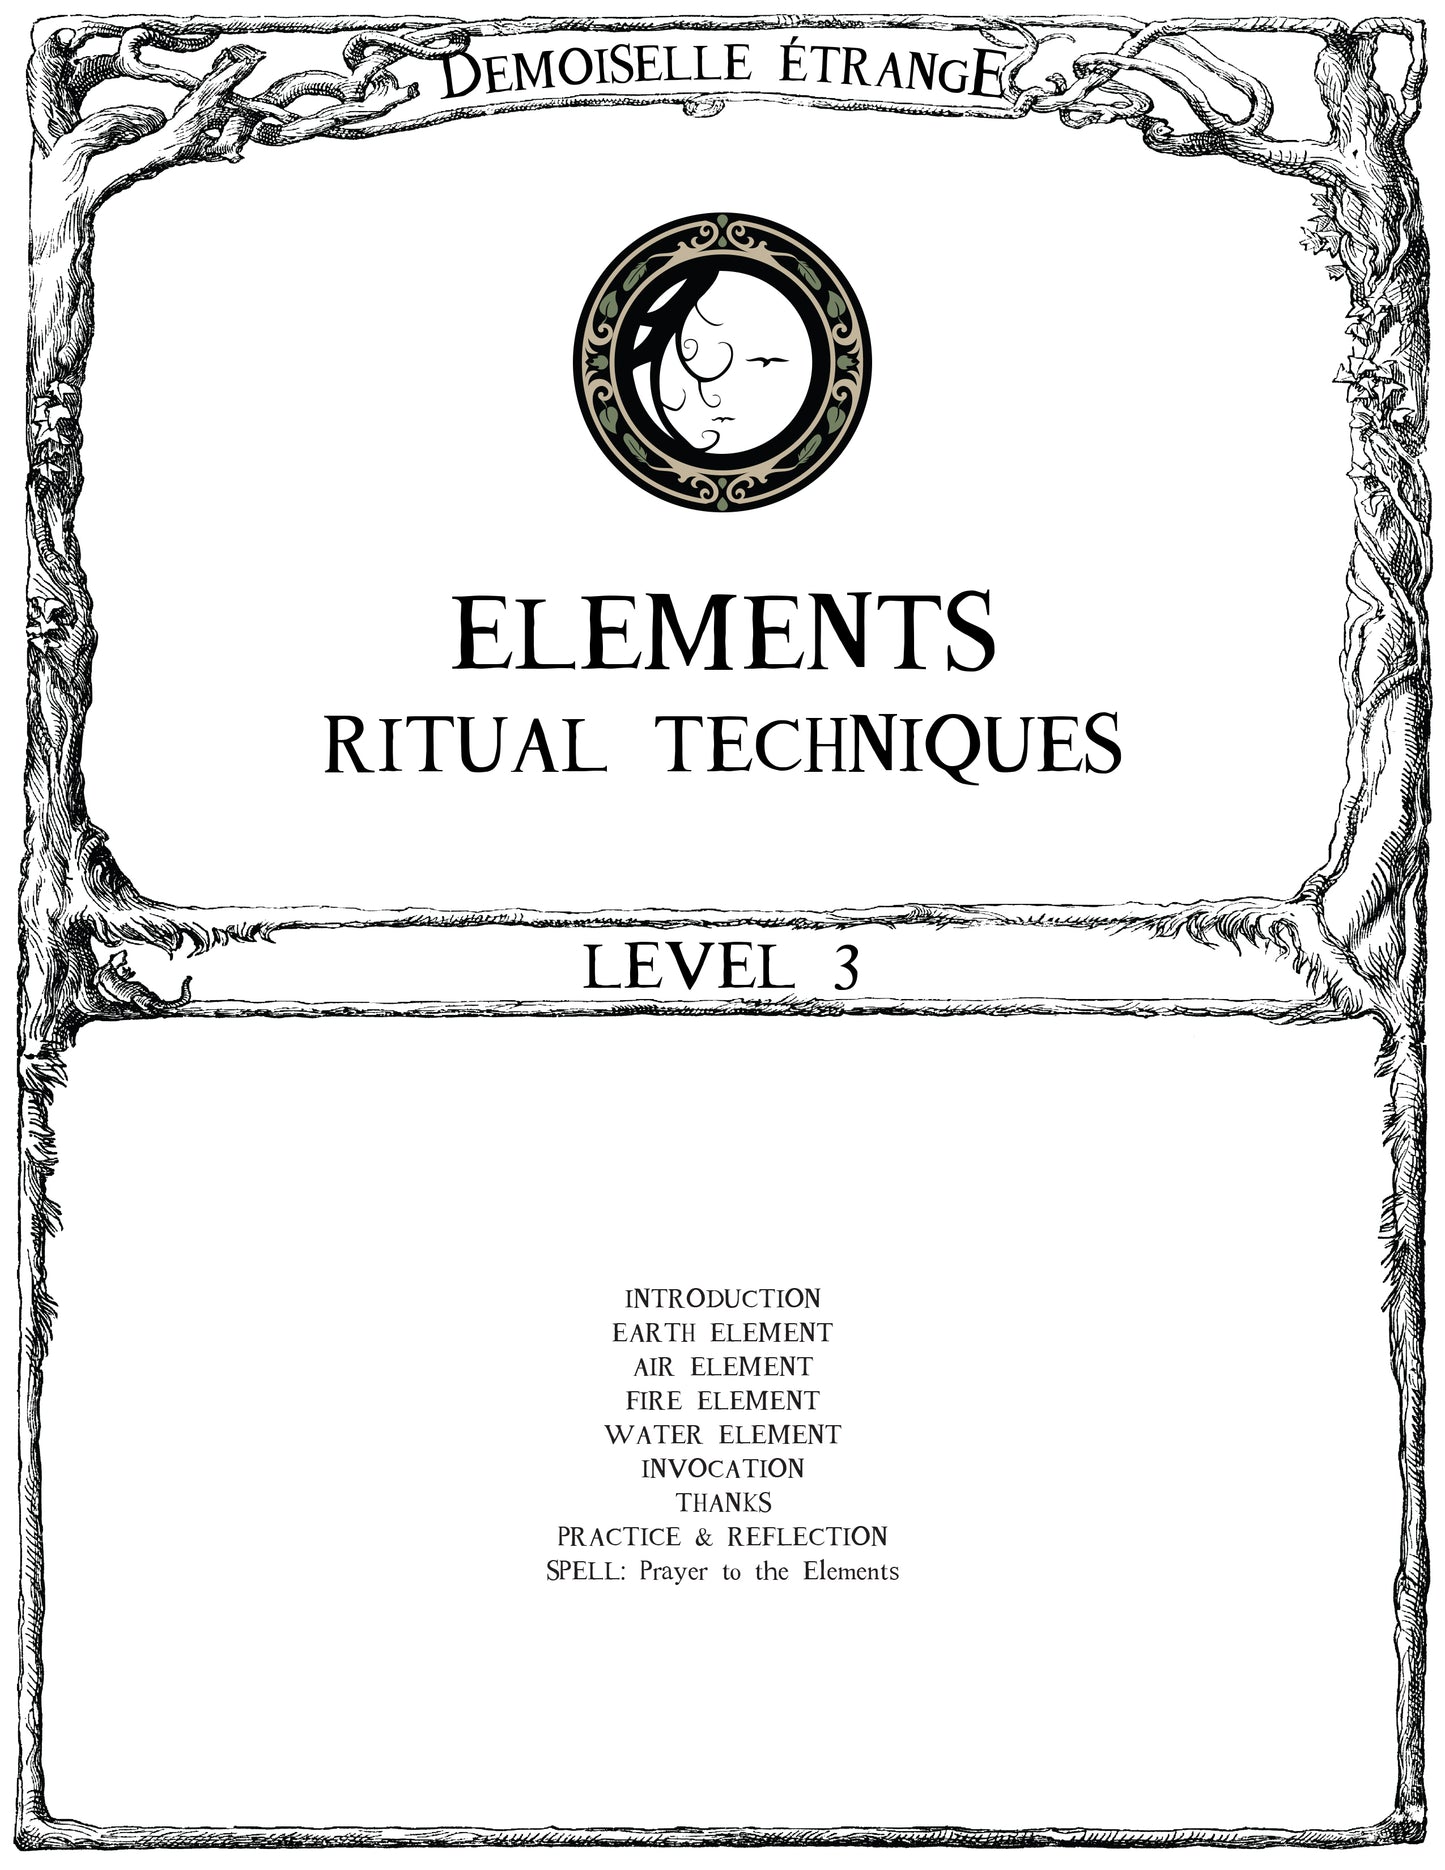 ELEMENTS (L3) Ritual techniques